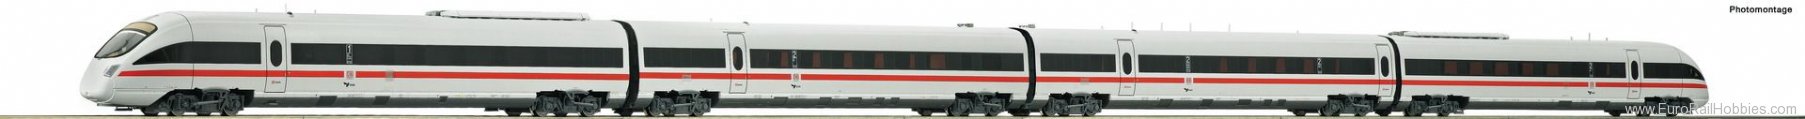 Roco 78106 DSB Diesel multiple unit class 605 (Marklin A